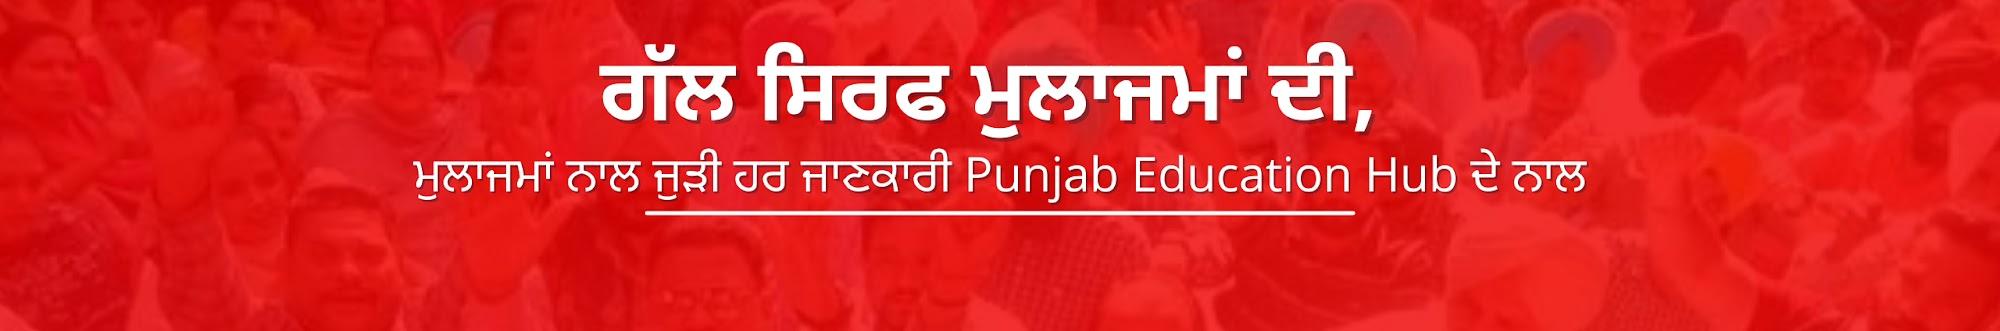 Punjab Education Hub